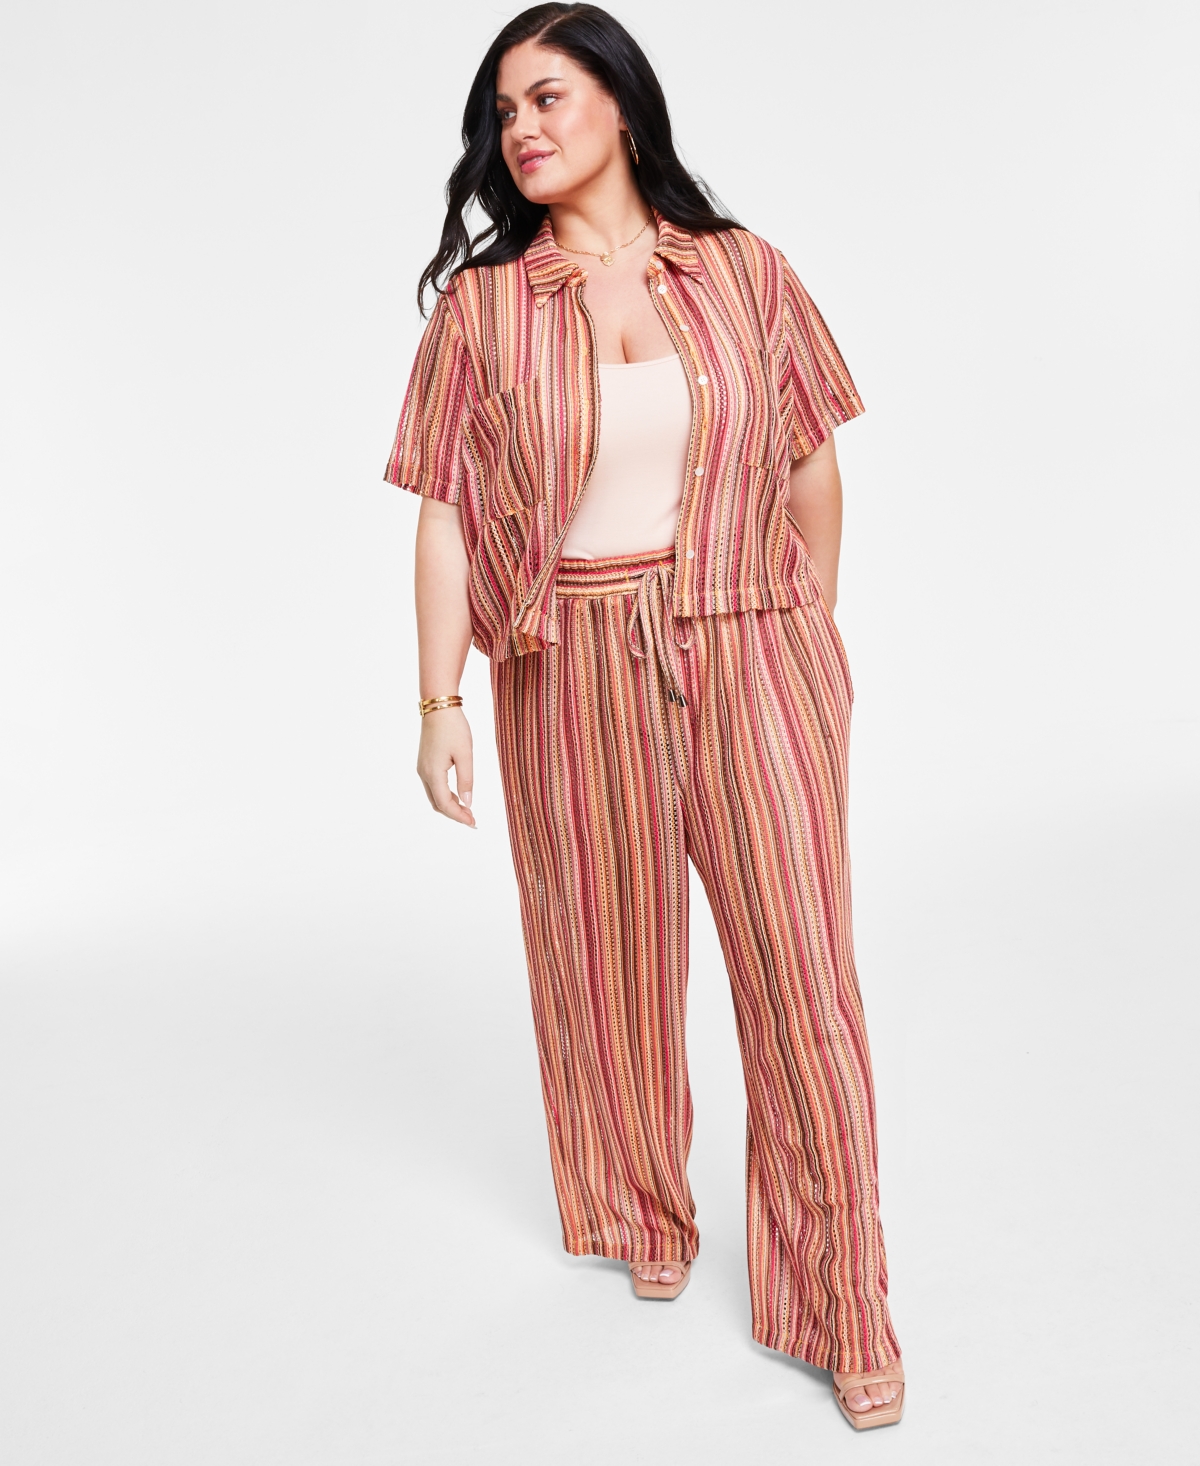 Nina Parker Trendy Plus Size Striped Crochet Top